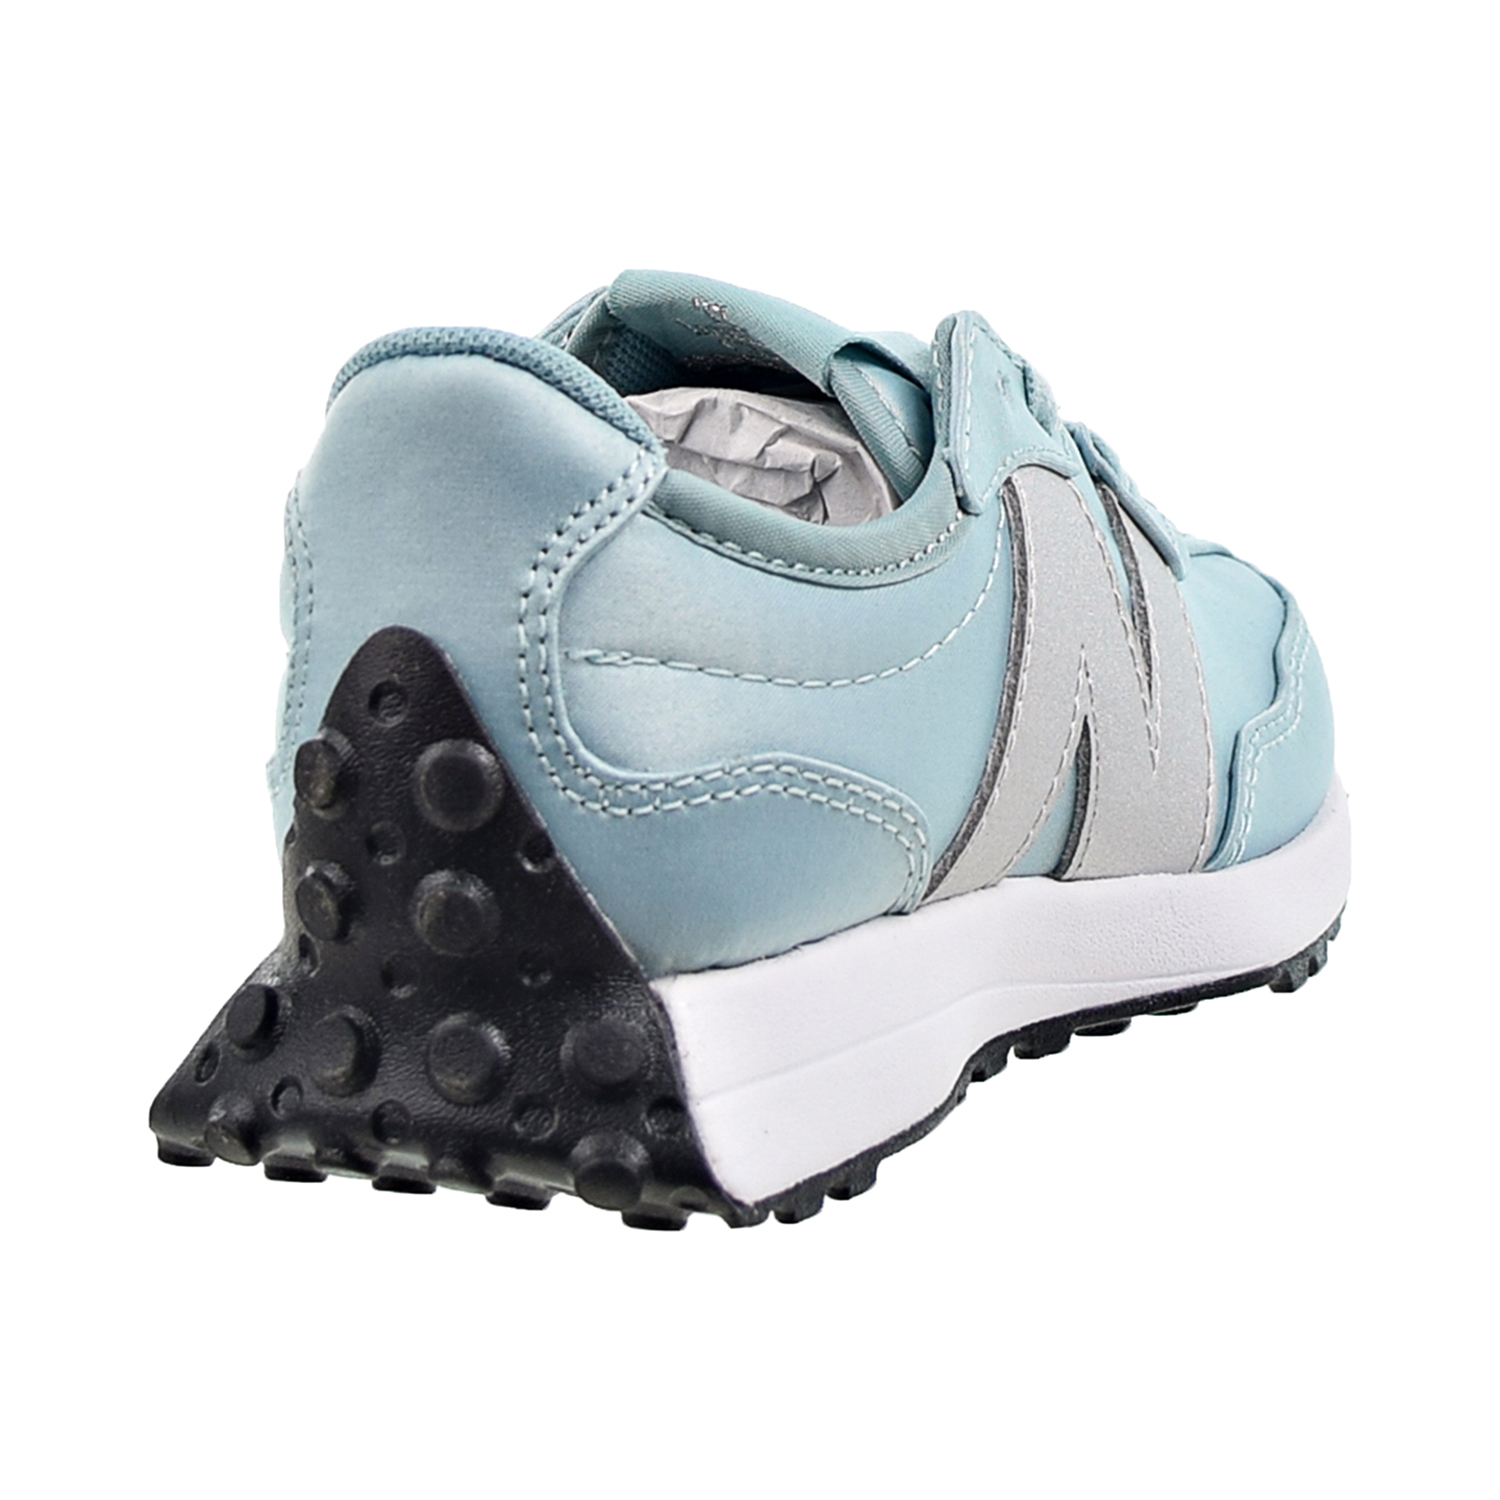 New Balance 327 Little Kids' Shoes Teal Blue-Silver ps327-mv1